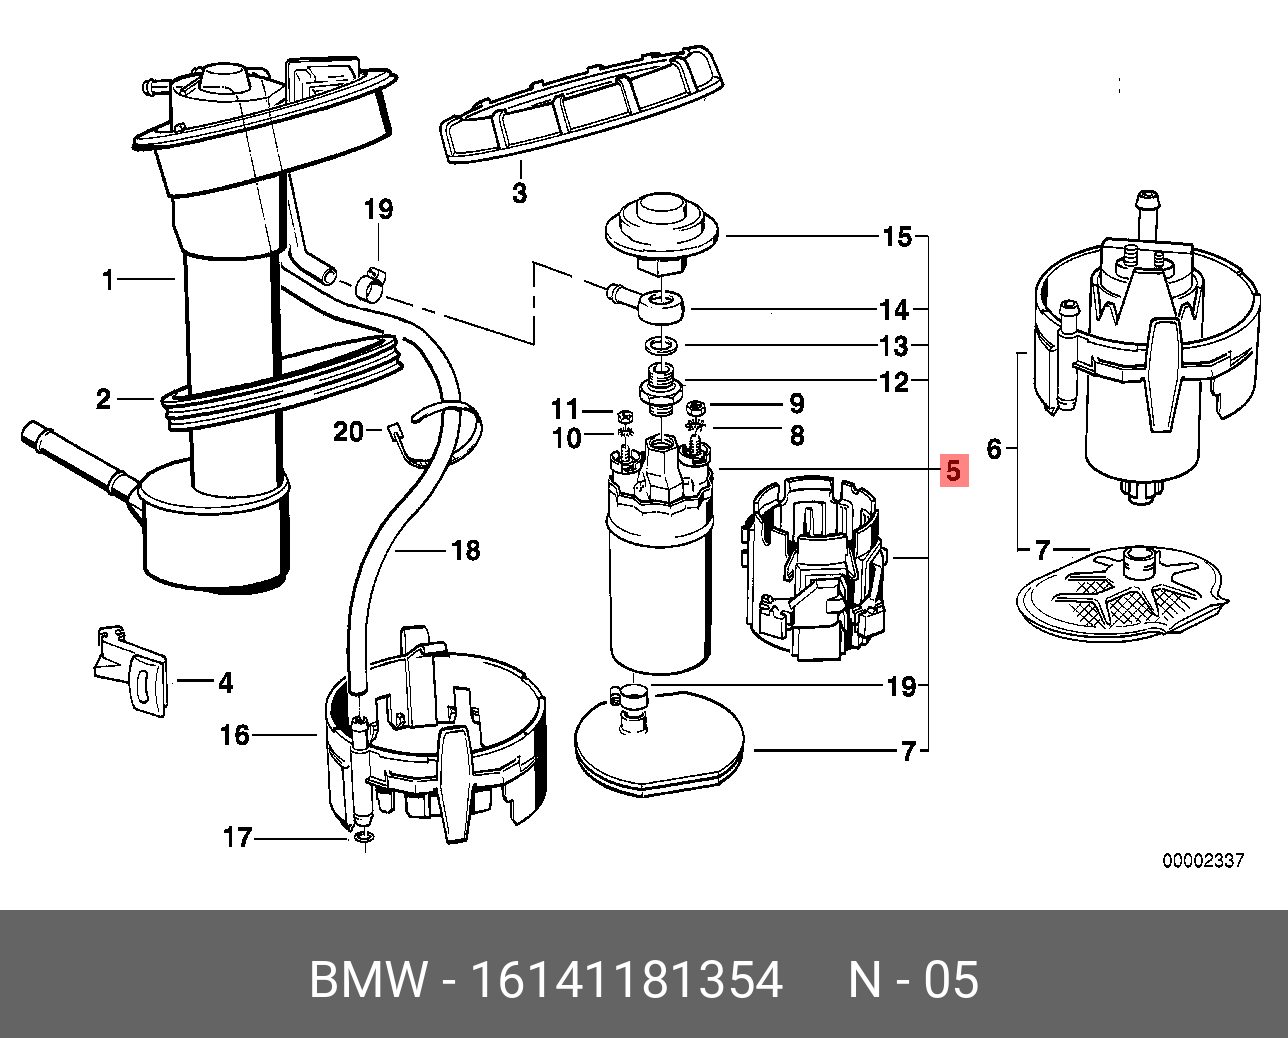 Топливный насос БМВ e34. Фильтр топливный в баке БМВ е39. Топливный насос BMW e39 схема. Топливный насос БМВ е53 дизель. Насос е34